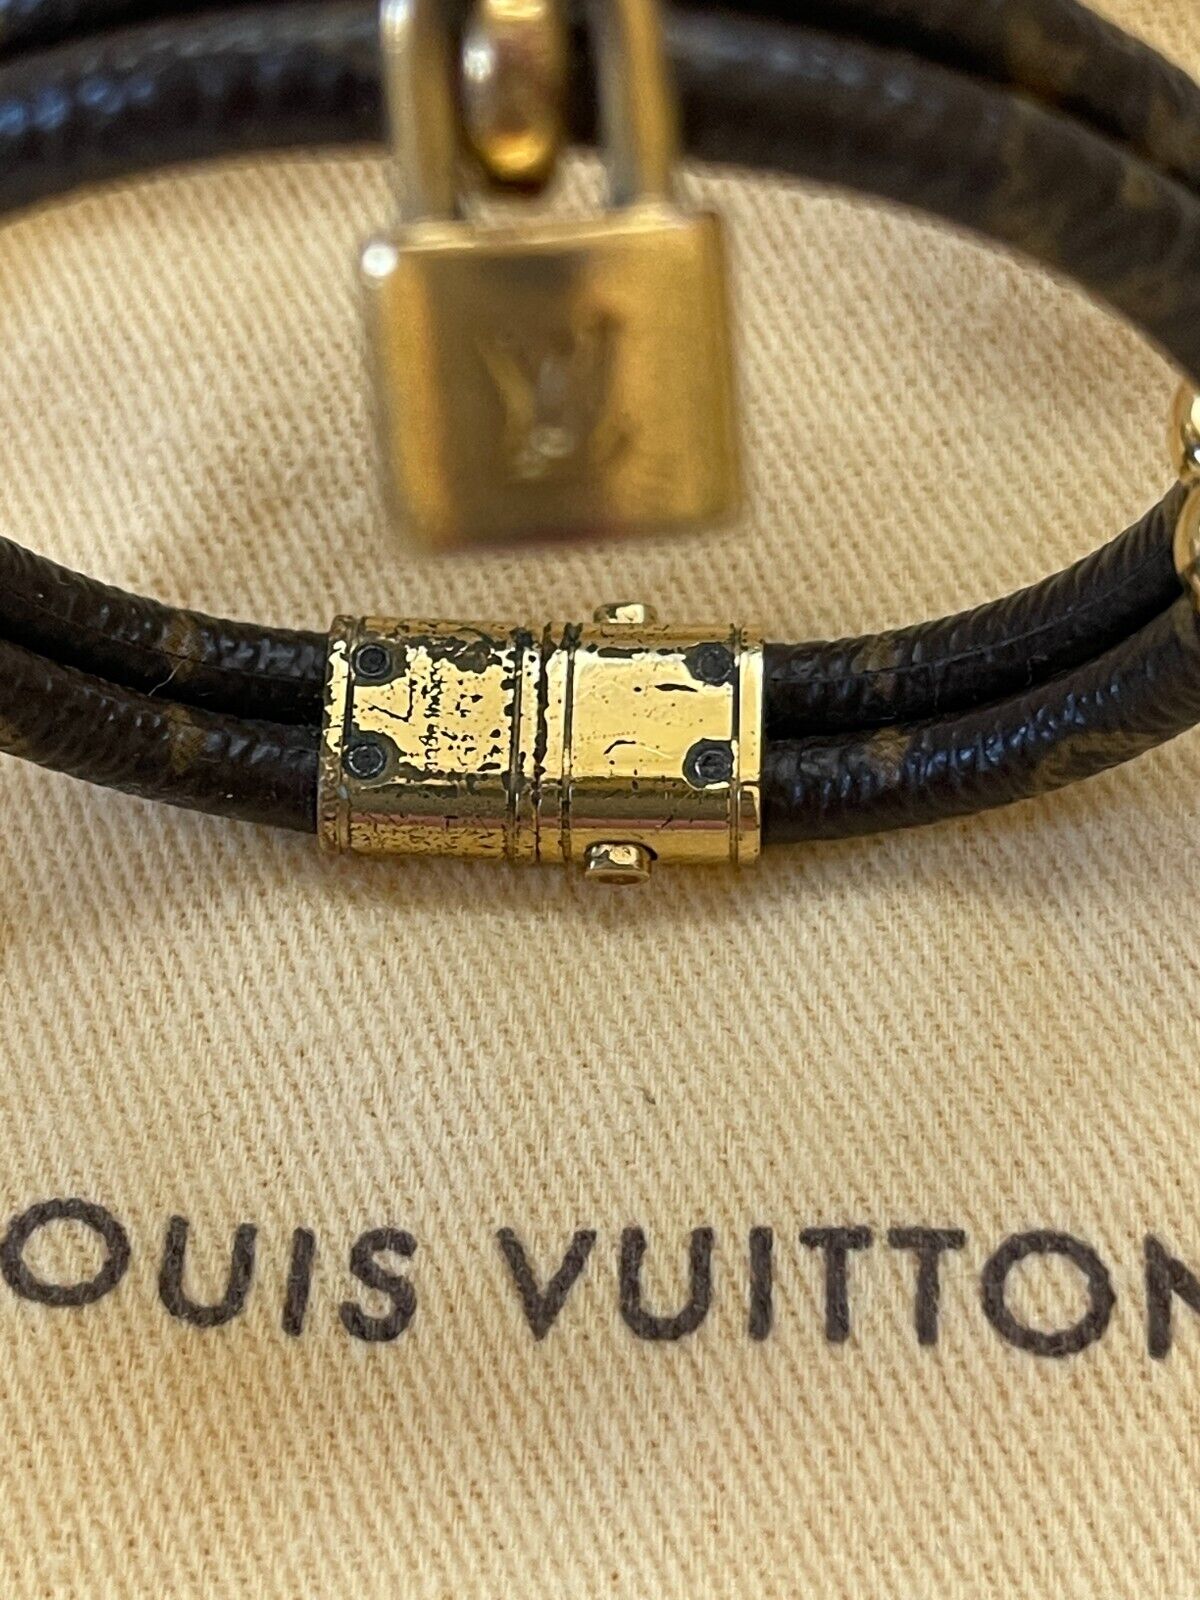 Louis Vuitton Monogram Keep It Twice Lock Brown Leather 6” Bracelet